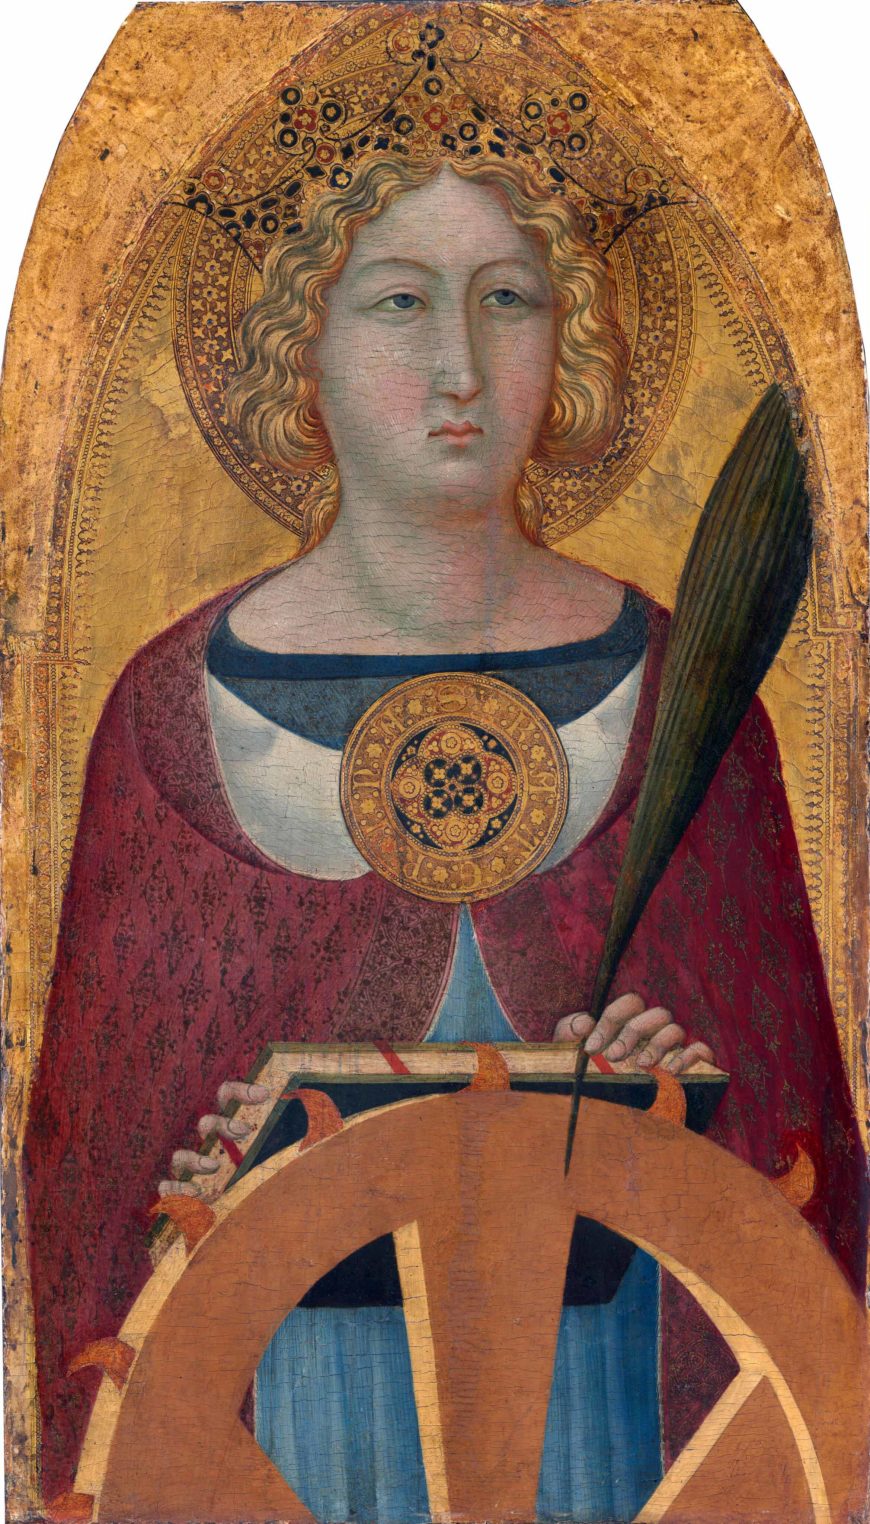 Bartolomeo Bulgarini, St Catherine of Alexandria, c. 1335–1340, tempera and gold leaf on panel, 73.5 × 42 cm. (National Gallery of Art)